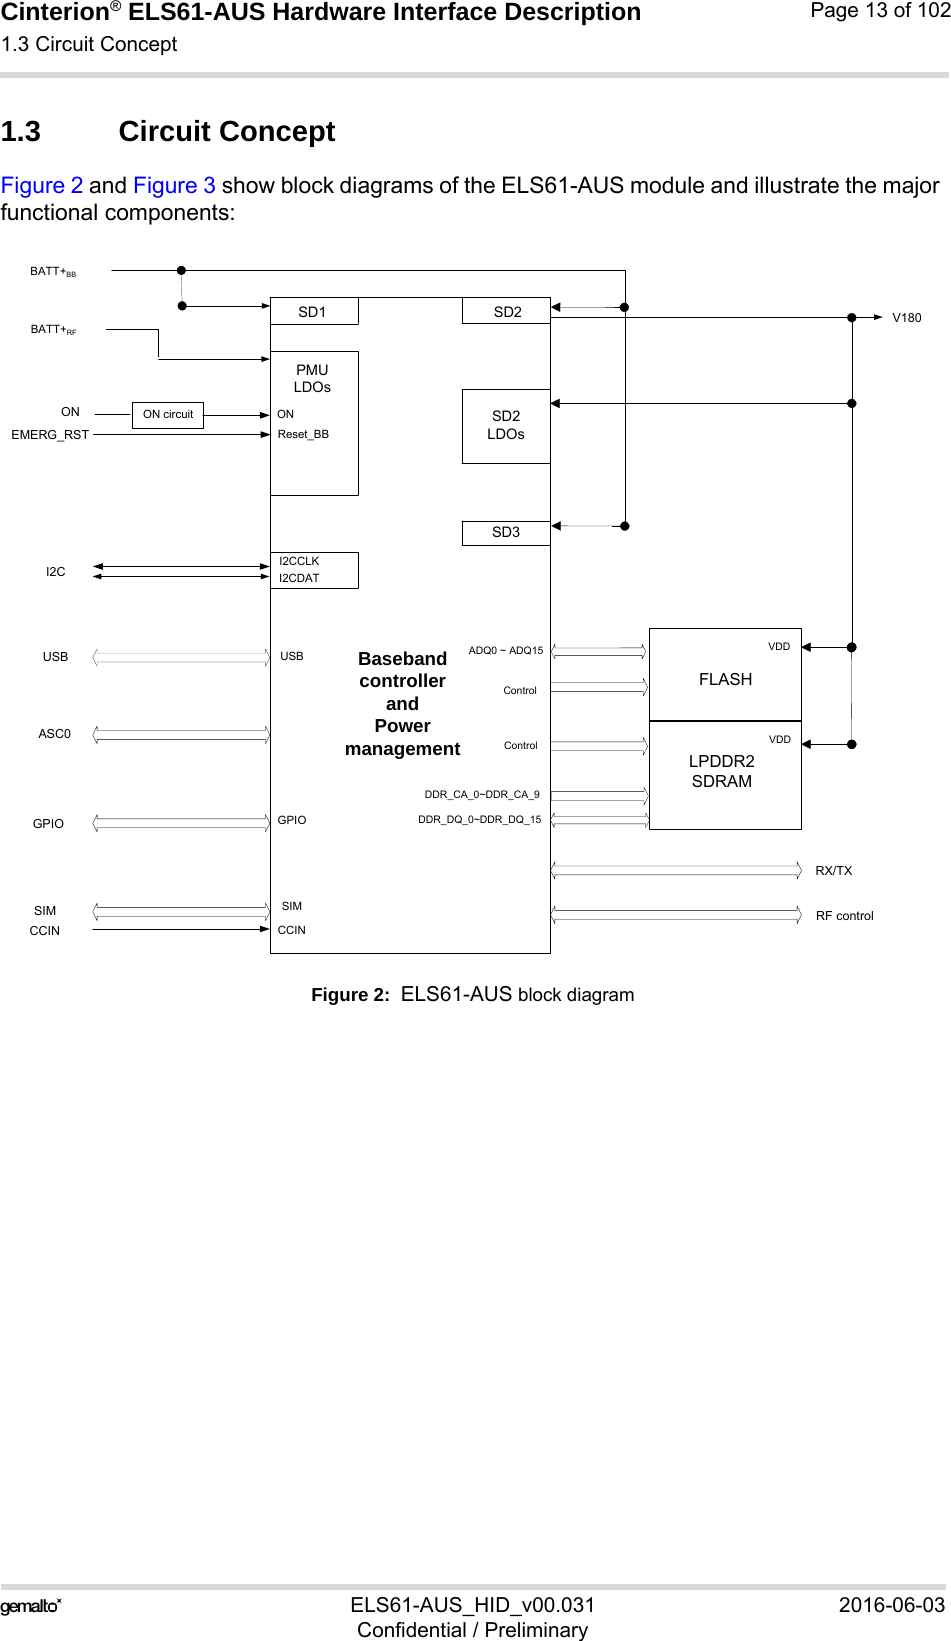 Cinterion® ELS61-AUS Hardware Interface Description1.3 Circuit Concept14ELS61-AUS_HID_v00.031 2016-06-03Confidential / PreliminaryPage 13 of 1021.3 Circuit ConceptFigure 2 and Figure 3 show block diagrams of the ELS61-AUS module and illustrate the major functional components:Figure 2:  ELS61-AUS block diagramSD1 SD2SD2 LDOsPMULDOsONReset_BBSD3I2CDATI2CCLKUSBGPIOSIMCCINLPDDR2SDRAMFLASHVDDVDDADQ0 ~ ADQ15DDR_CA_0~DDR_CA_9DDR_DQ_0~DDR_DQ_15ControlControlCCINSIMGPIOASC0USBI2CON circuitONEMERG_RSTBATT+BBBATT+RFRX/TXRF controlV180Baseband controller and Power management